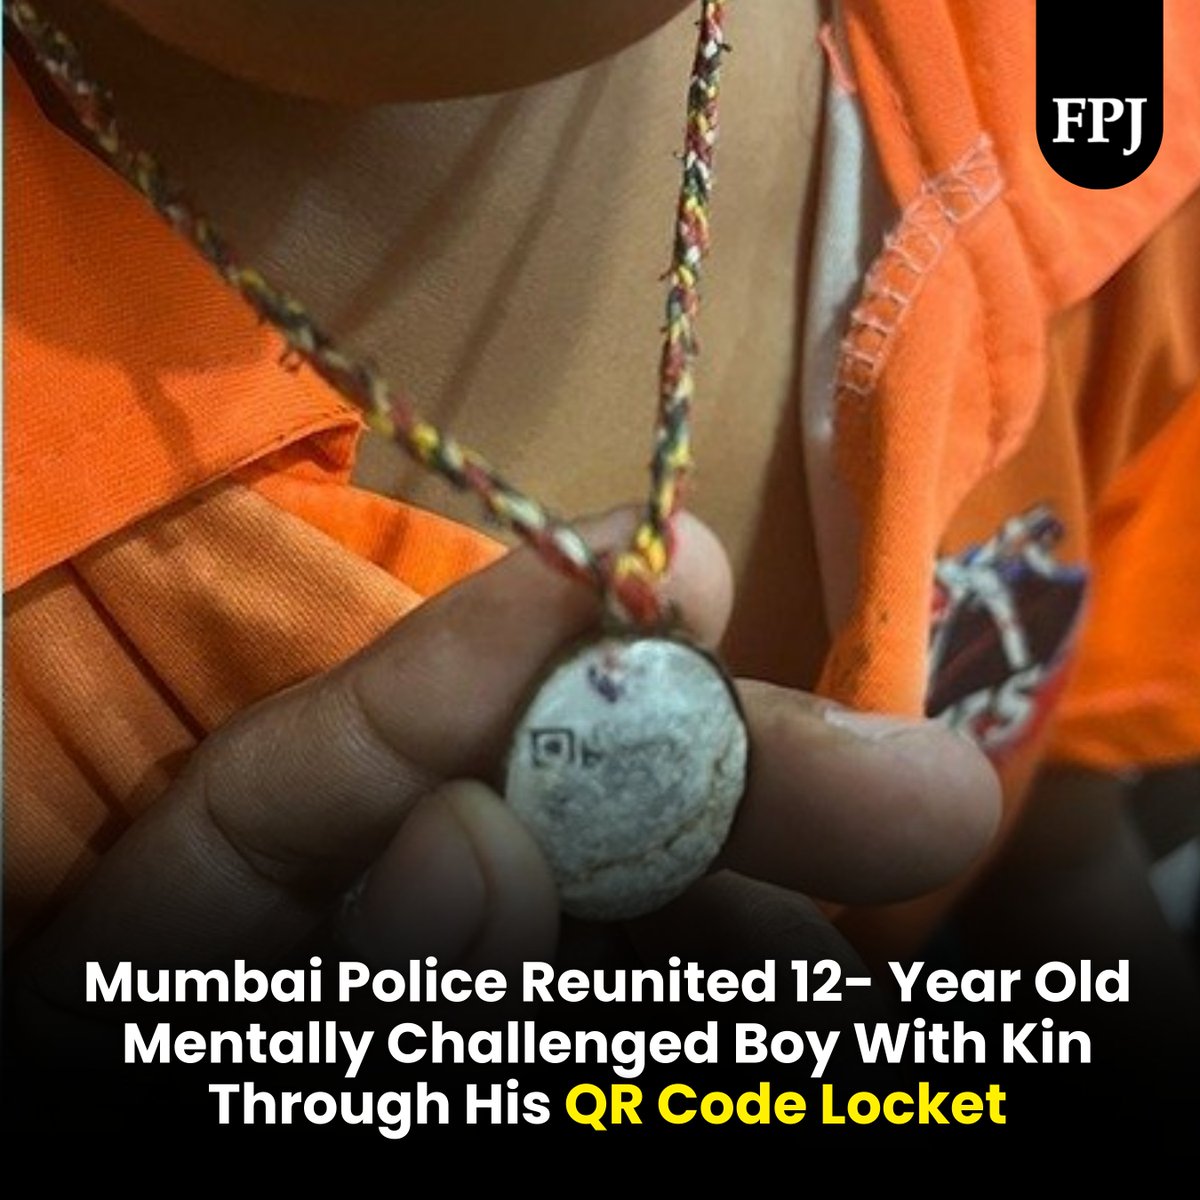 Mumbai News: Colaba Police Reunited 12- Year Old Mentally Challenged Boy With Kin Through His QR Code Locket

#Mumbai #Boy #QRcode @MumbaiPolice